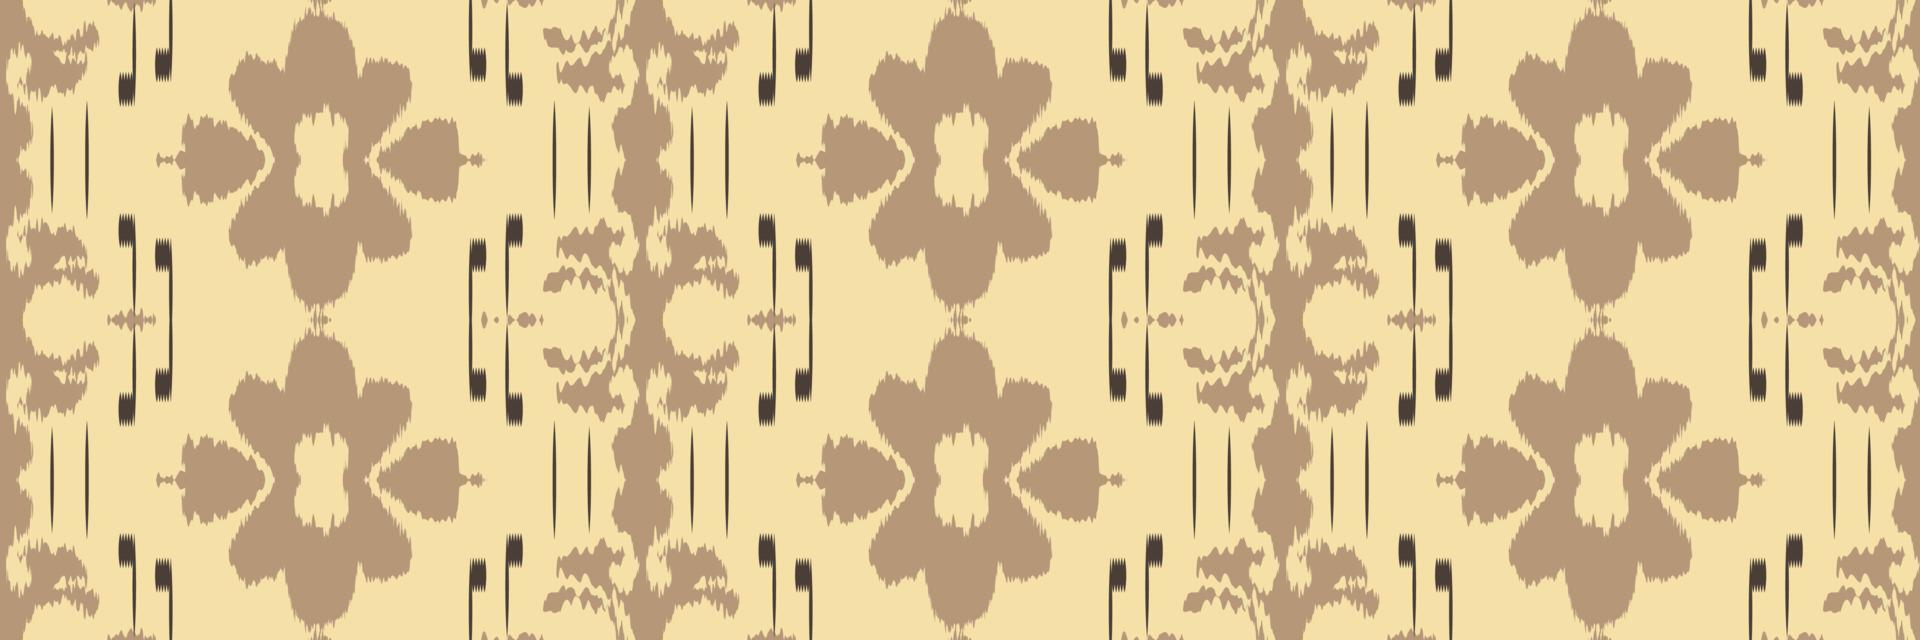 motivo textil batik ikat flores patrón sin costuras diseño vectorial digital para imprimir saree kurti borneo borde de tela símbolos de pincel muestras elegantes vector